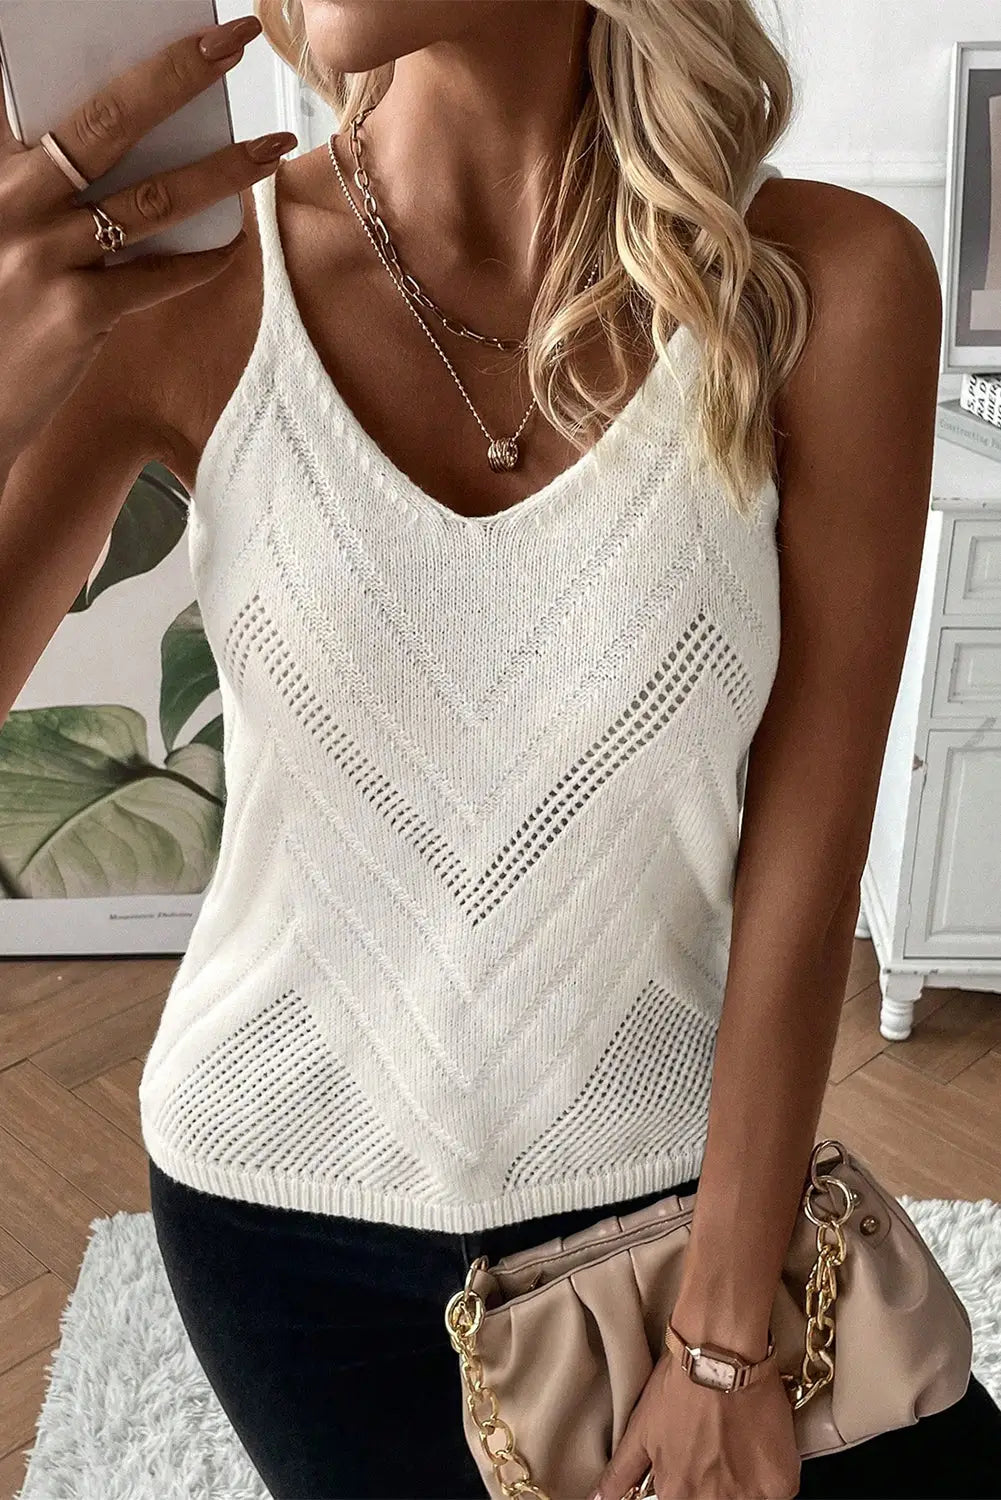 White chevron pointelle knit sweater vest - s / 100% cotton - tops/tank tops